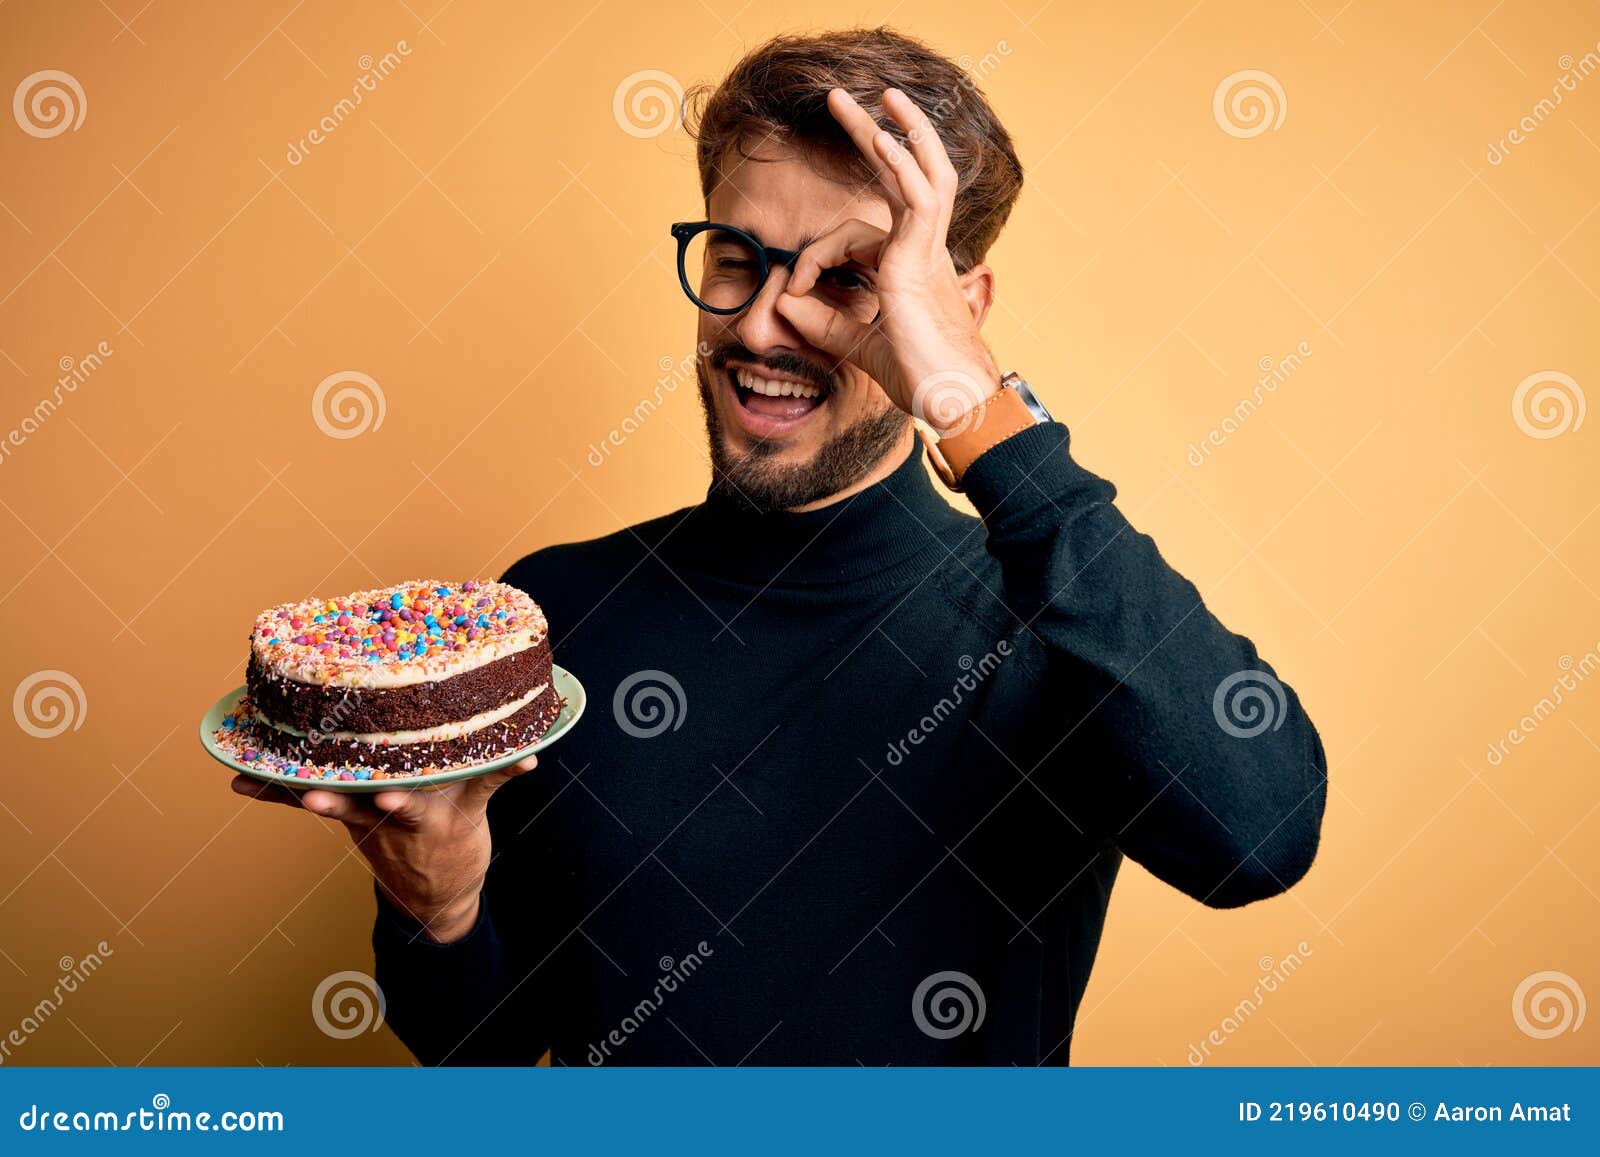 beard birthday cake | Cake for husband, Birthday cakes for men, Birthday  cake for husband